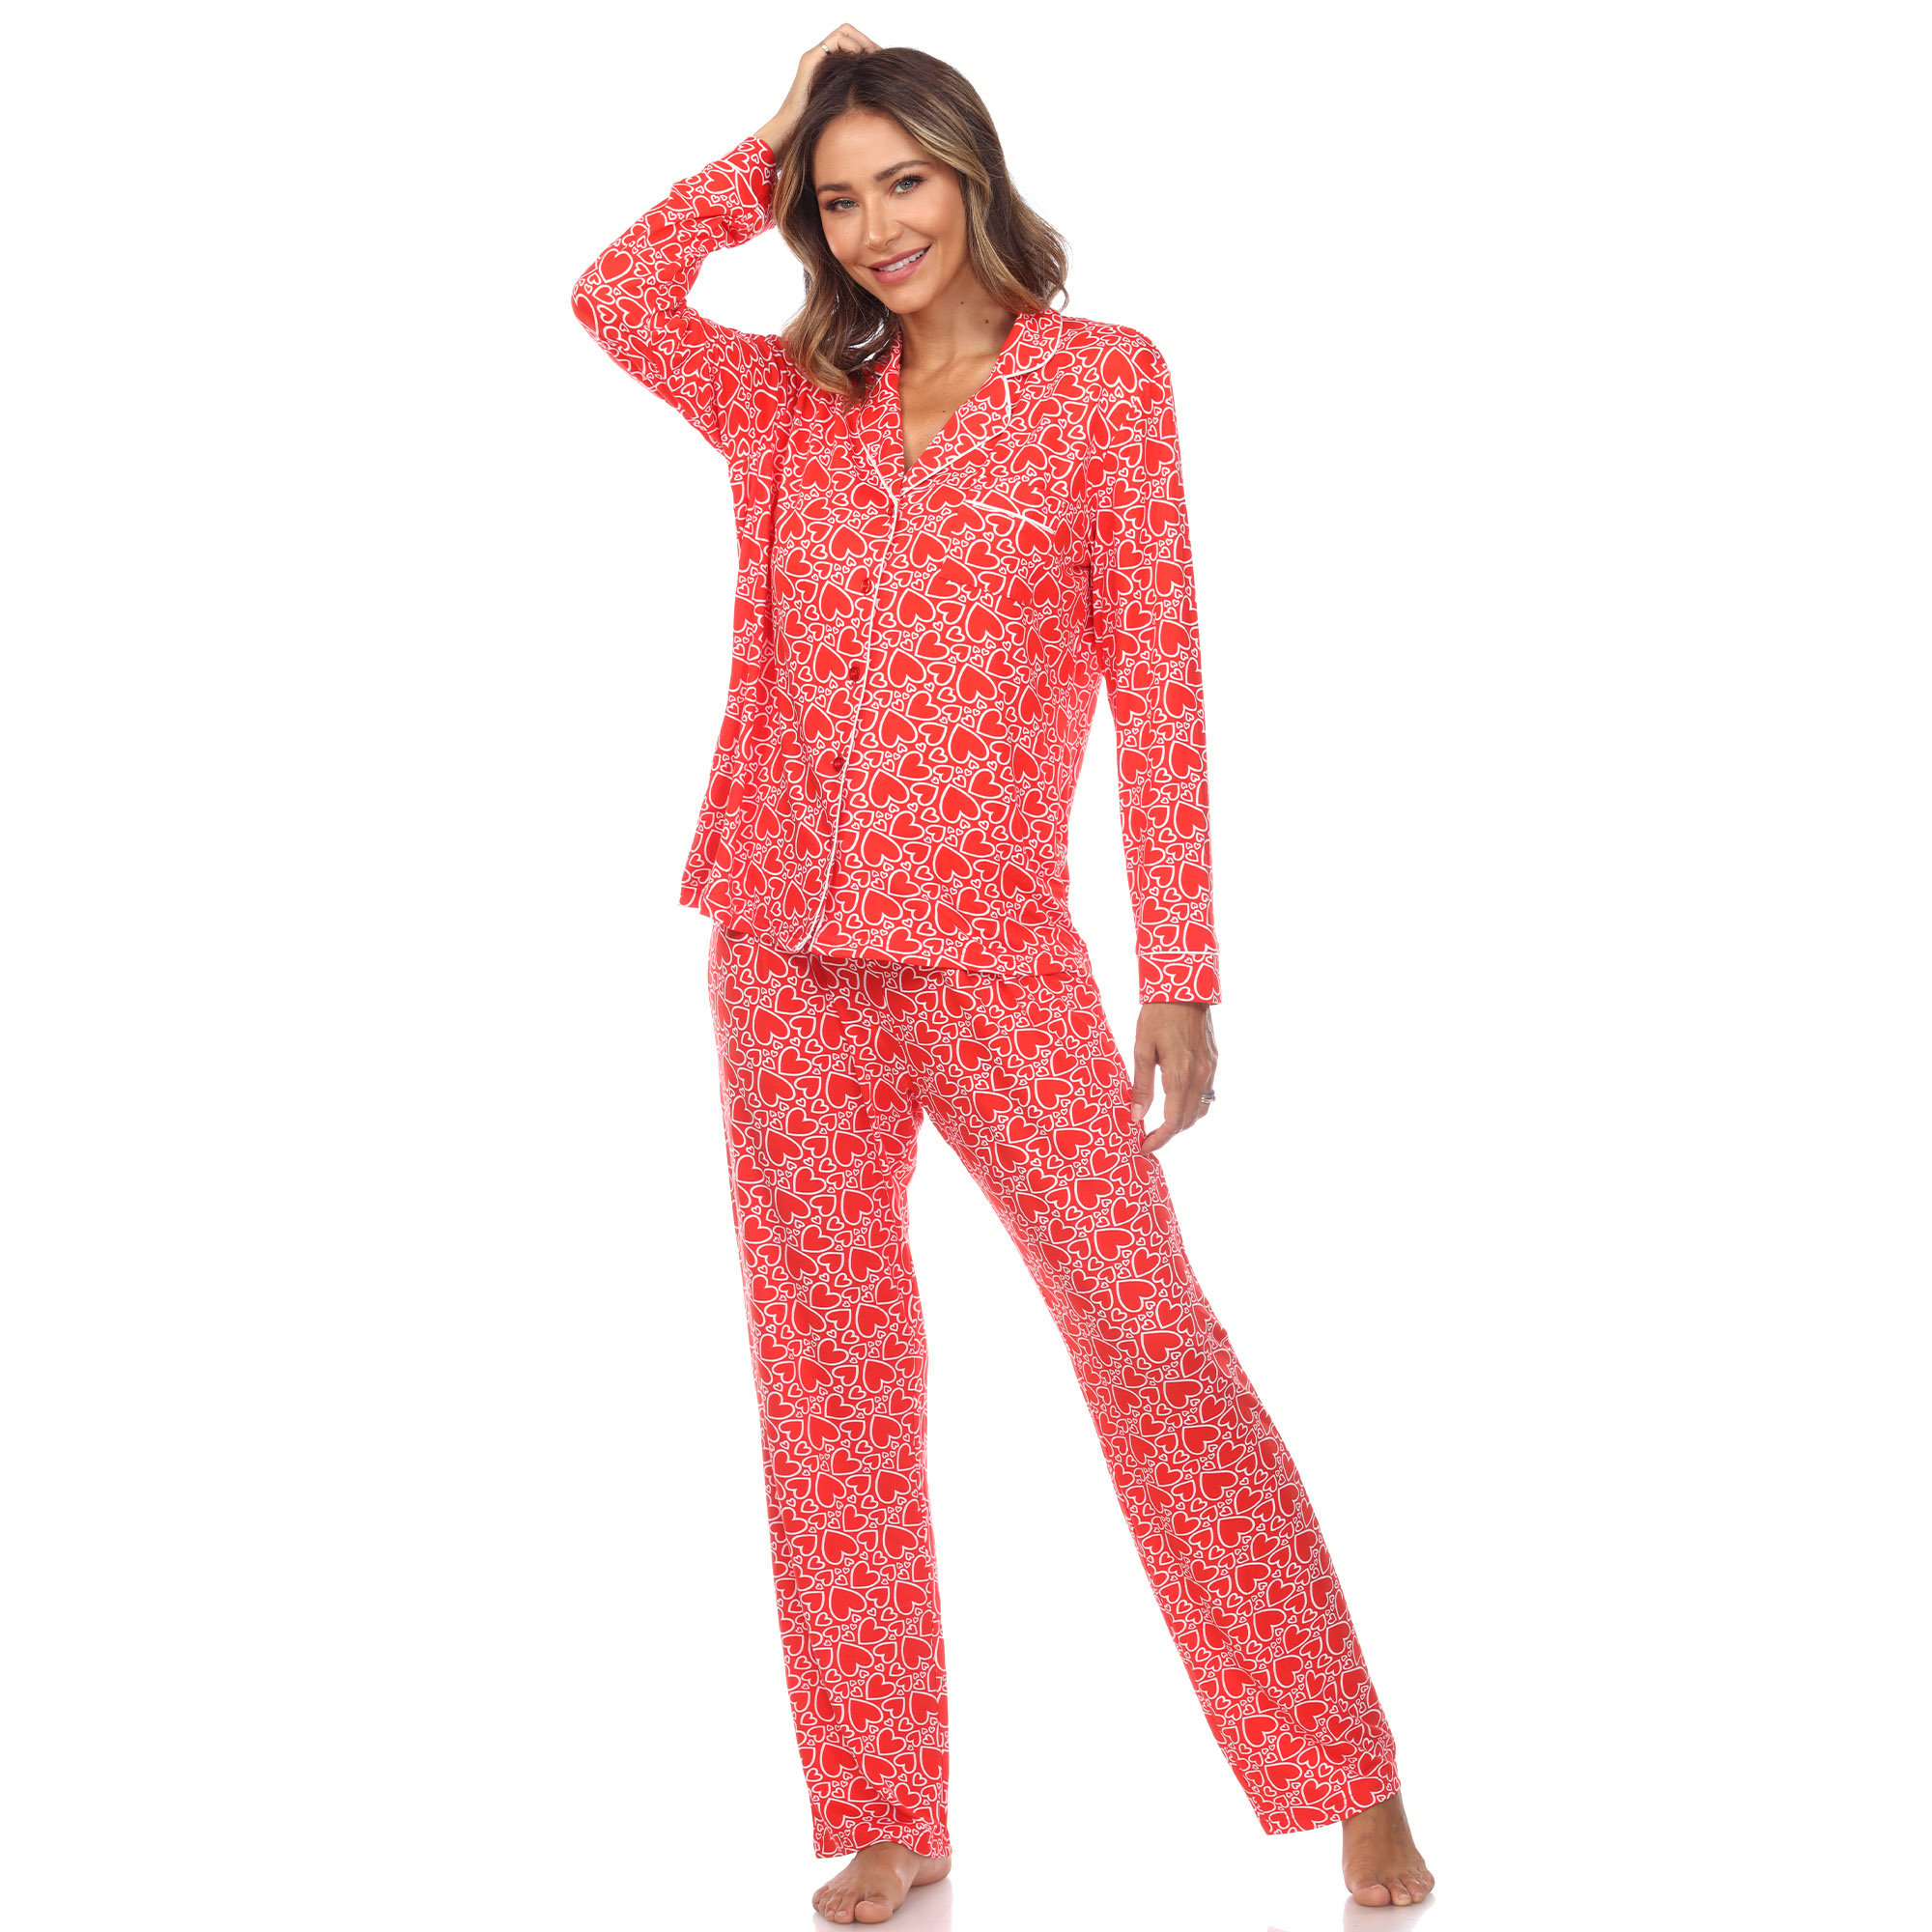 White Mark Women's Long Sleeve Hearts Pajama Set - Red, X-Large